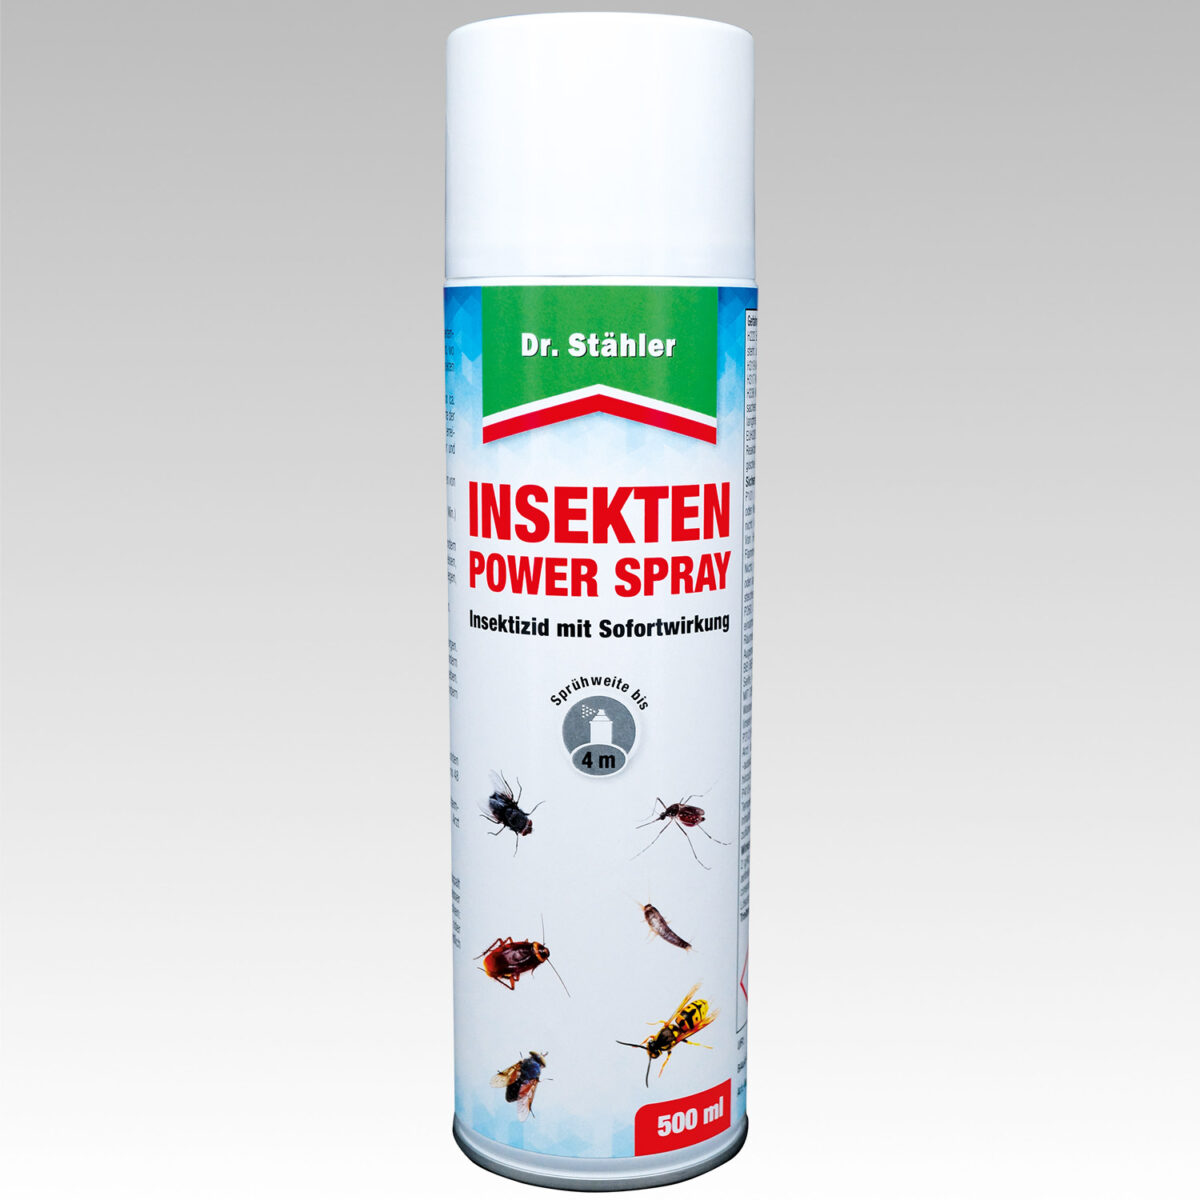 2111 Insekten Power Spray 500ml